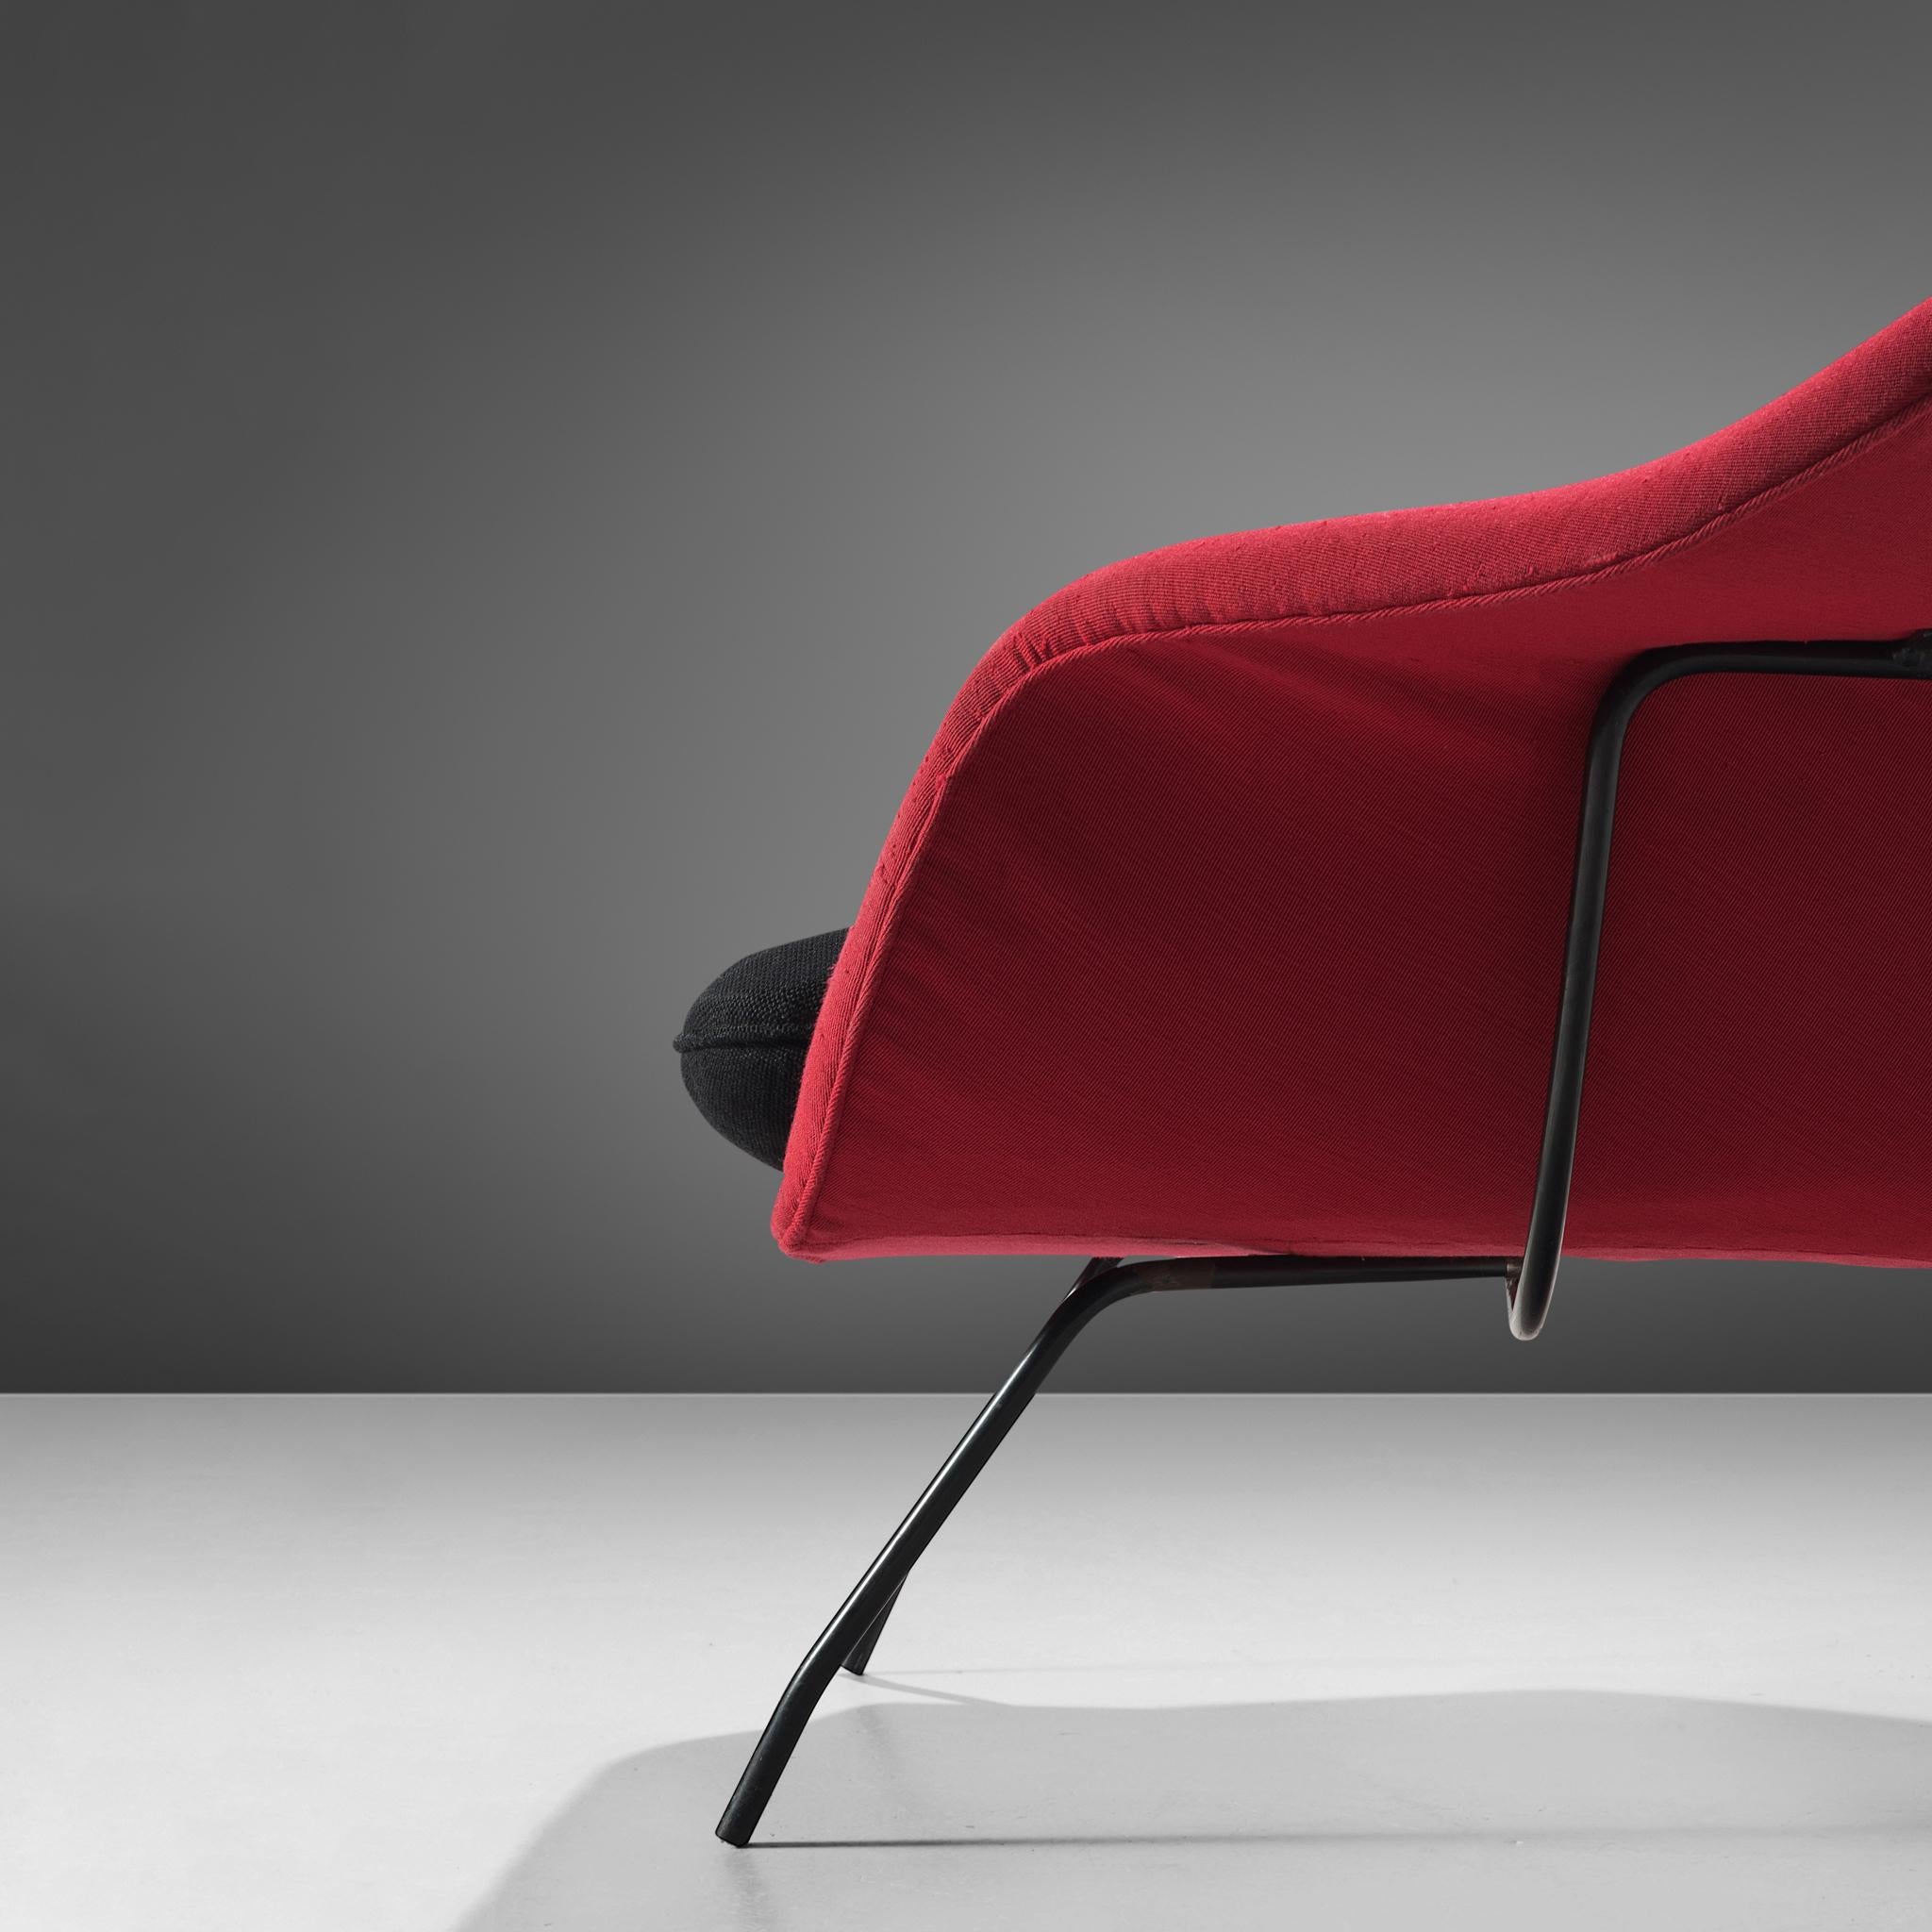 Steel Eero Saarinen ‘Womb’ Lounge Chair in Red and Black Upholstery For Sale